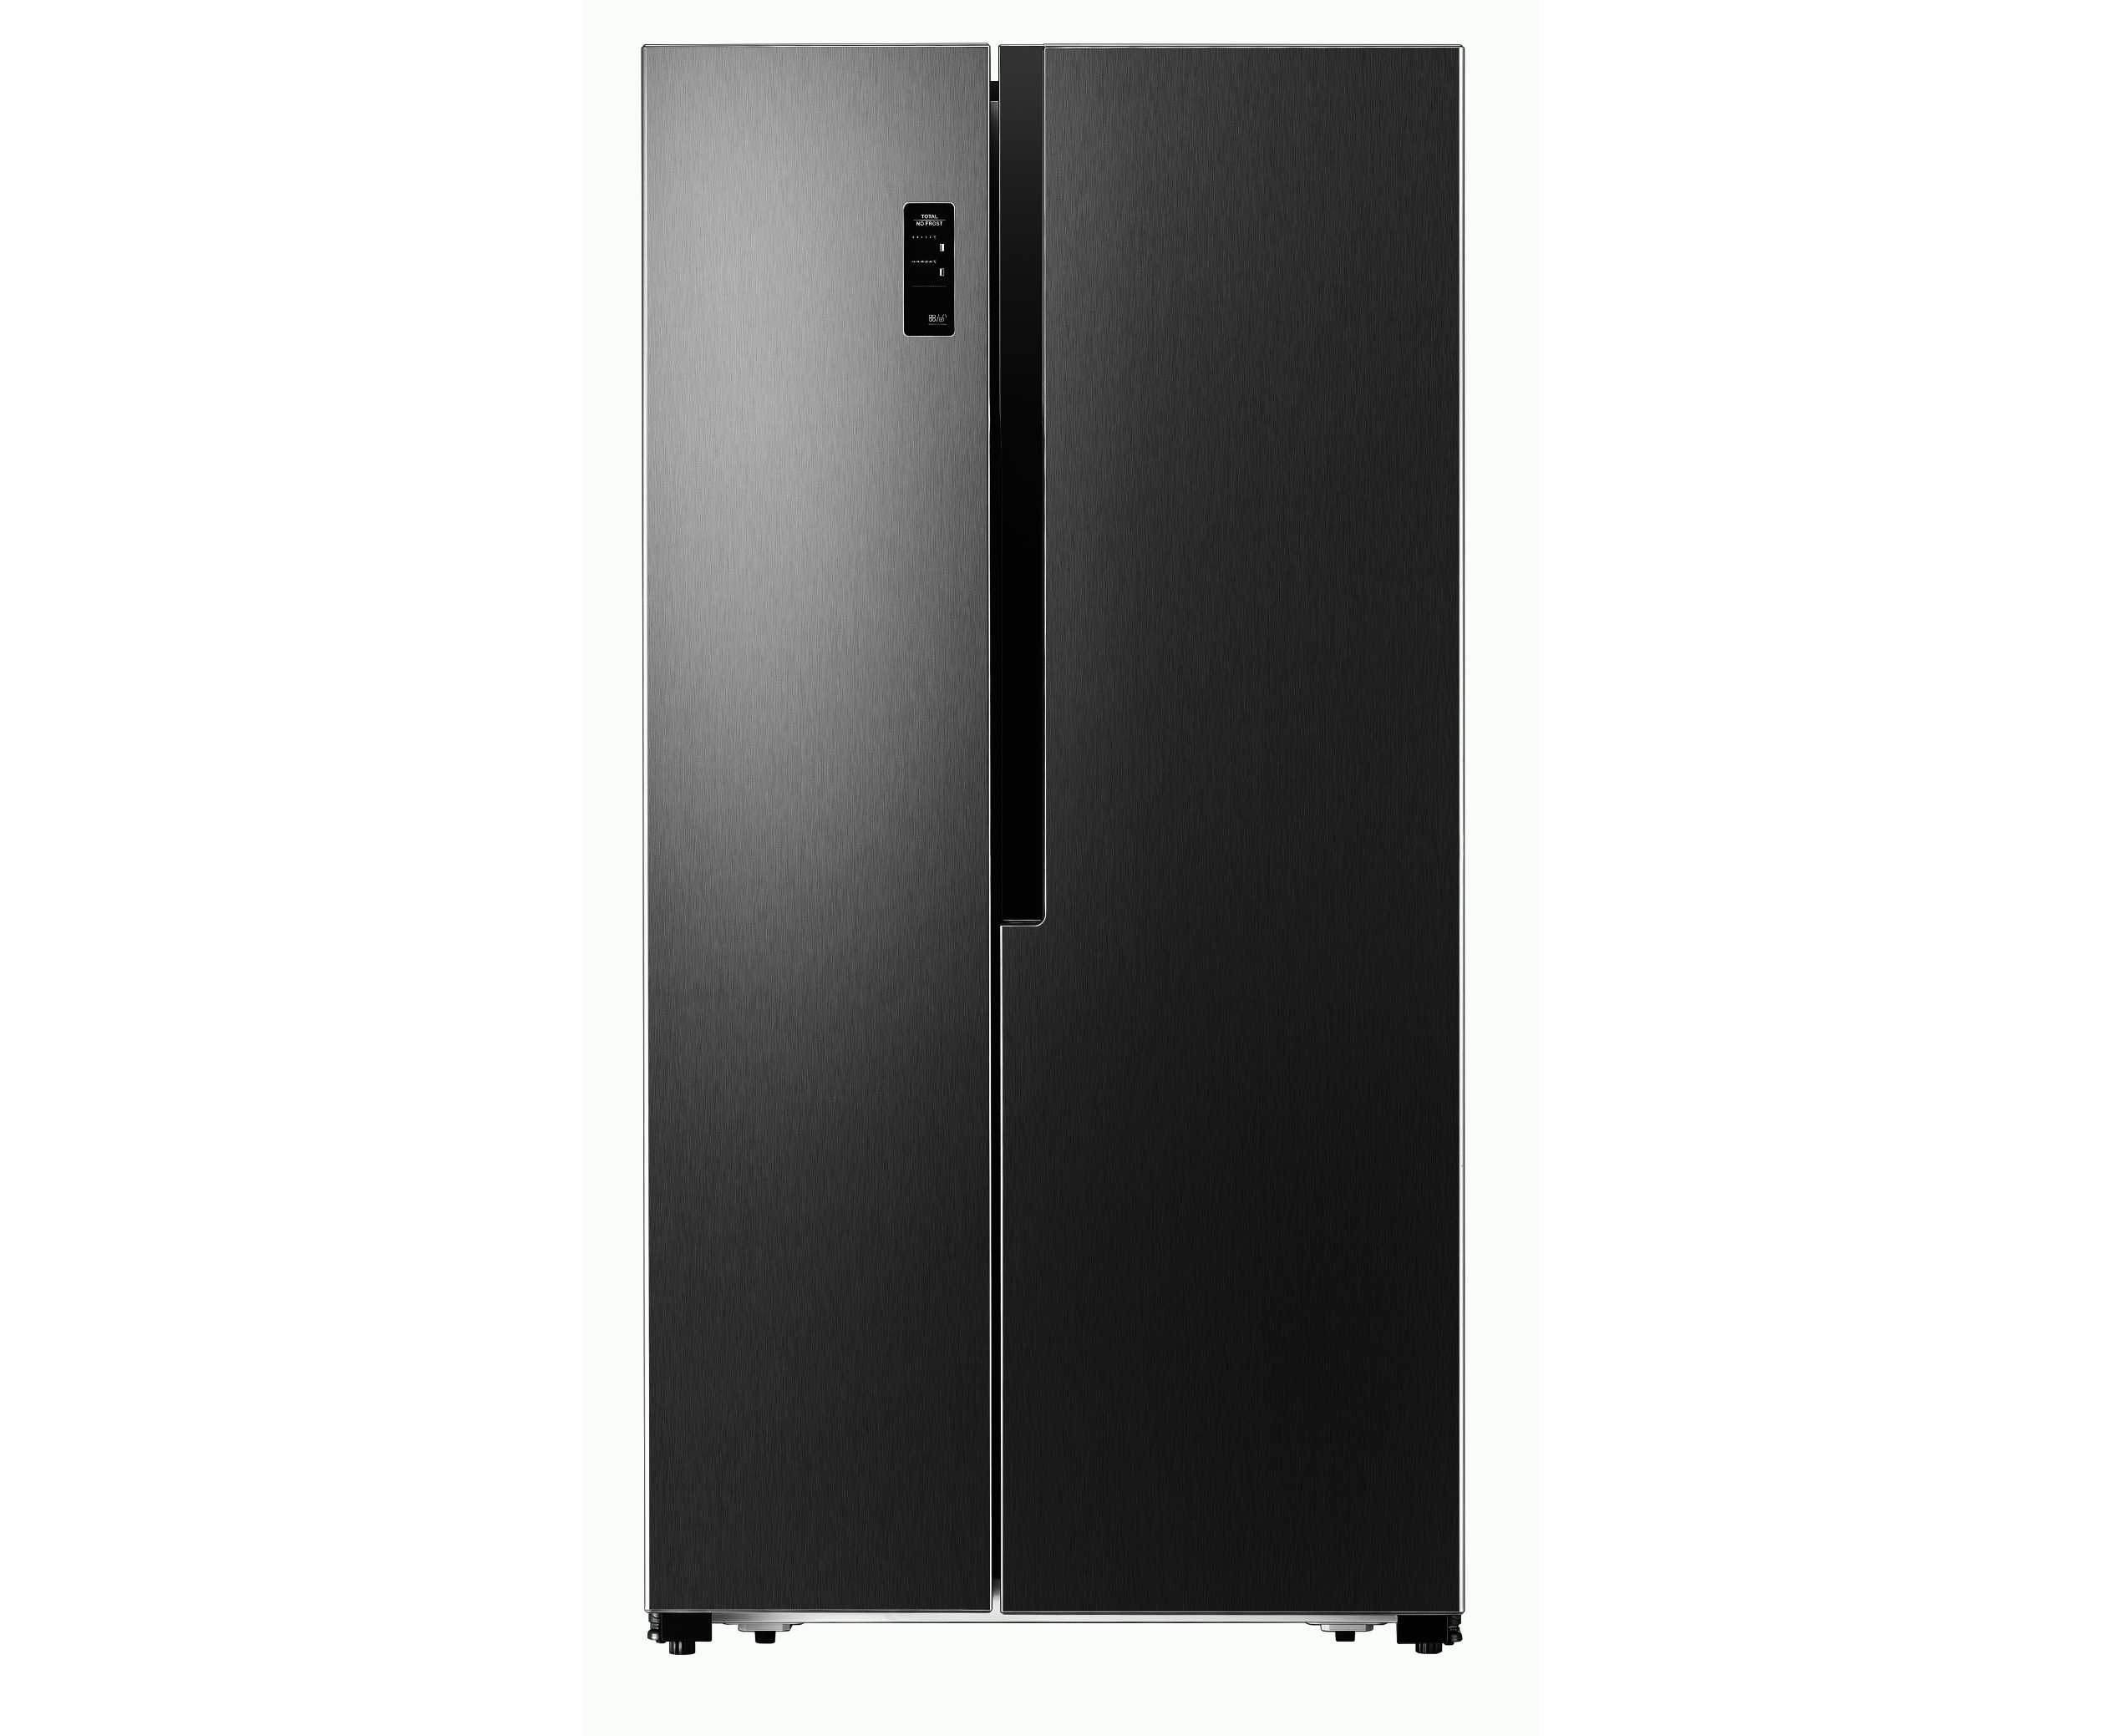 Hisense 67WS 516L Side by Side Refrigerator